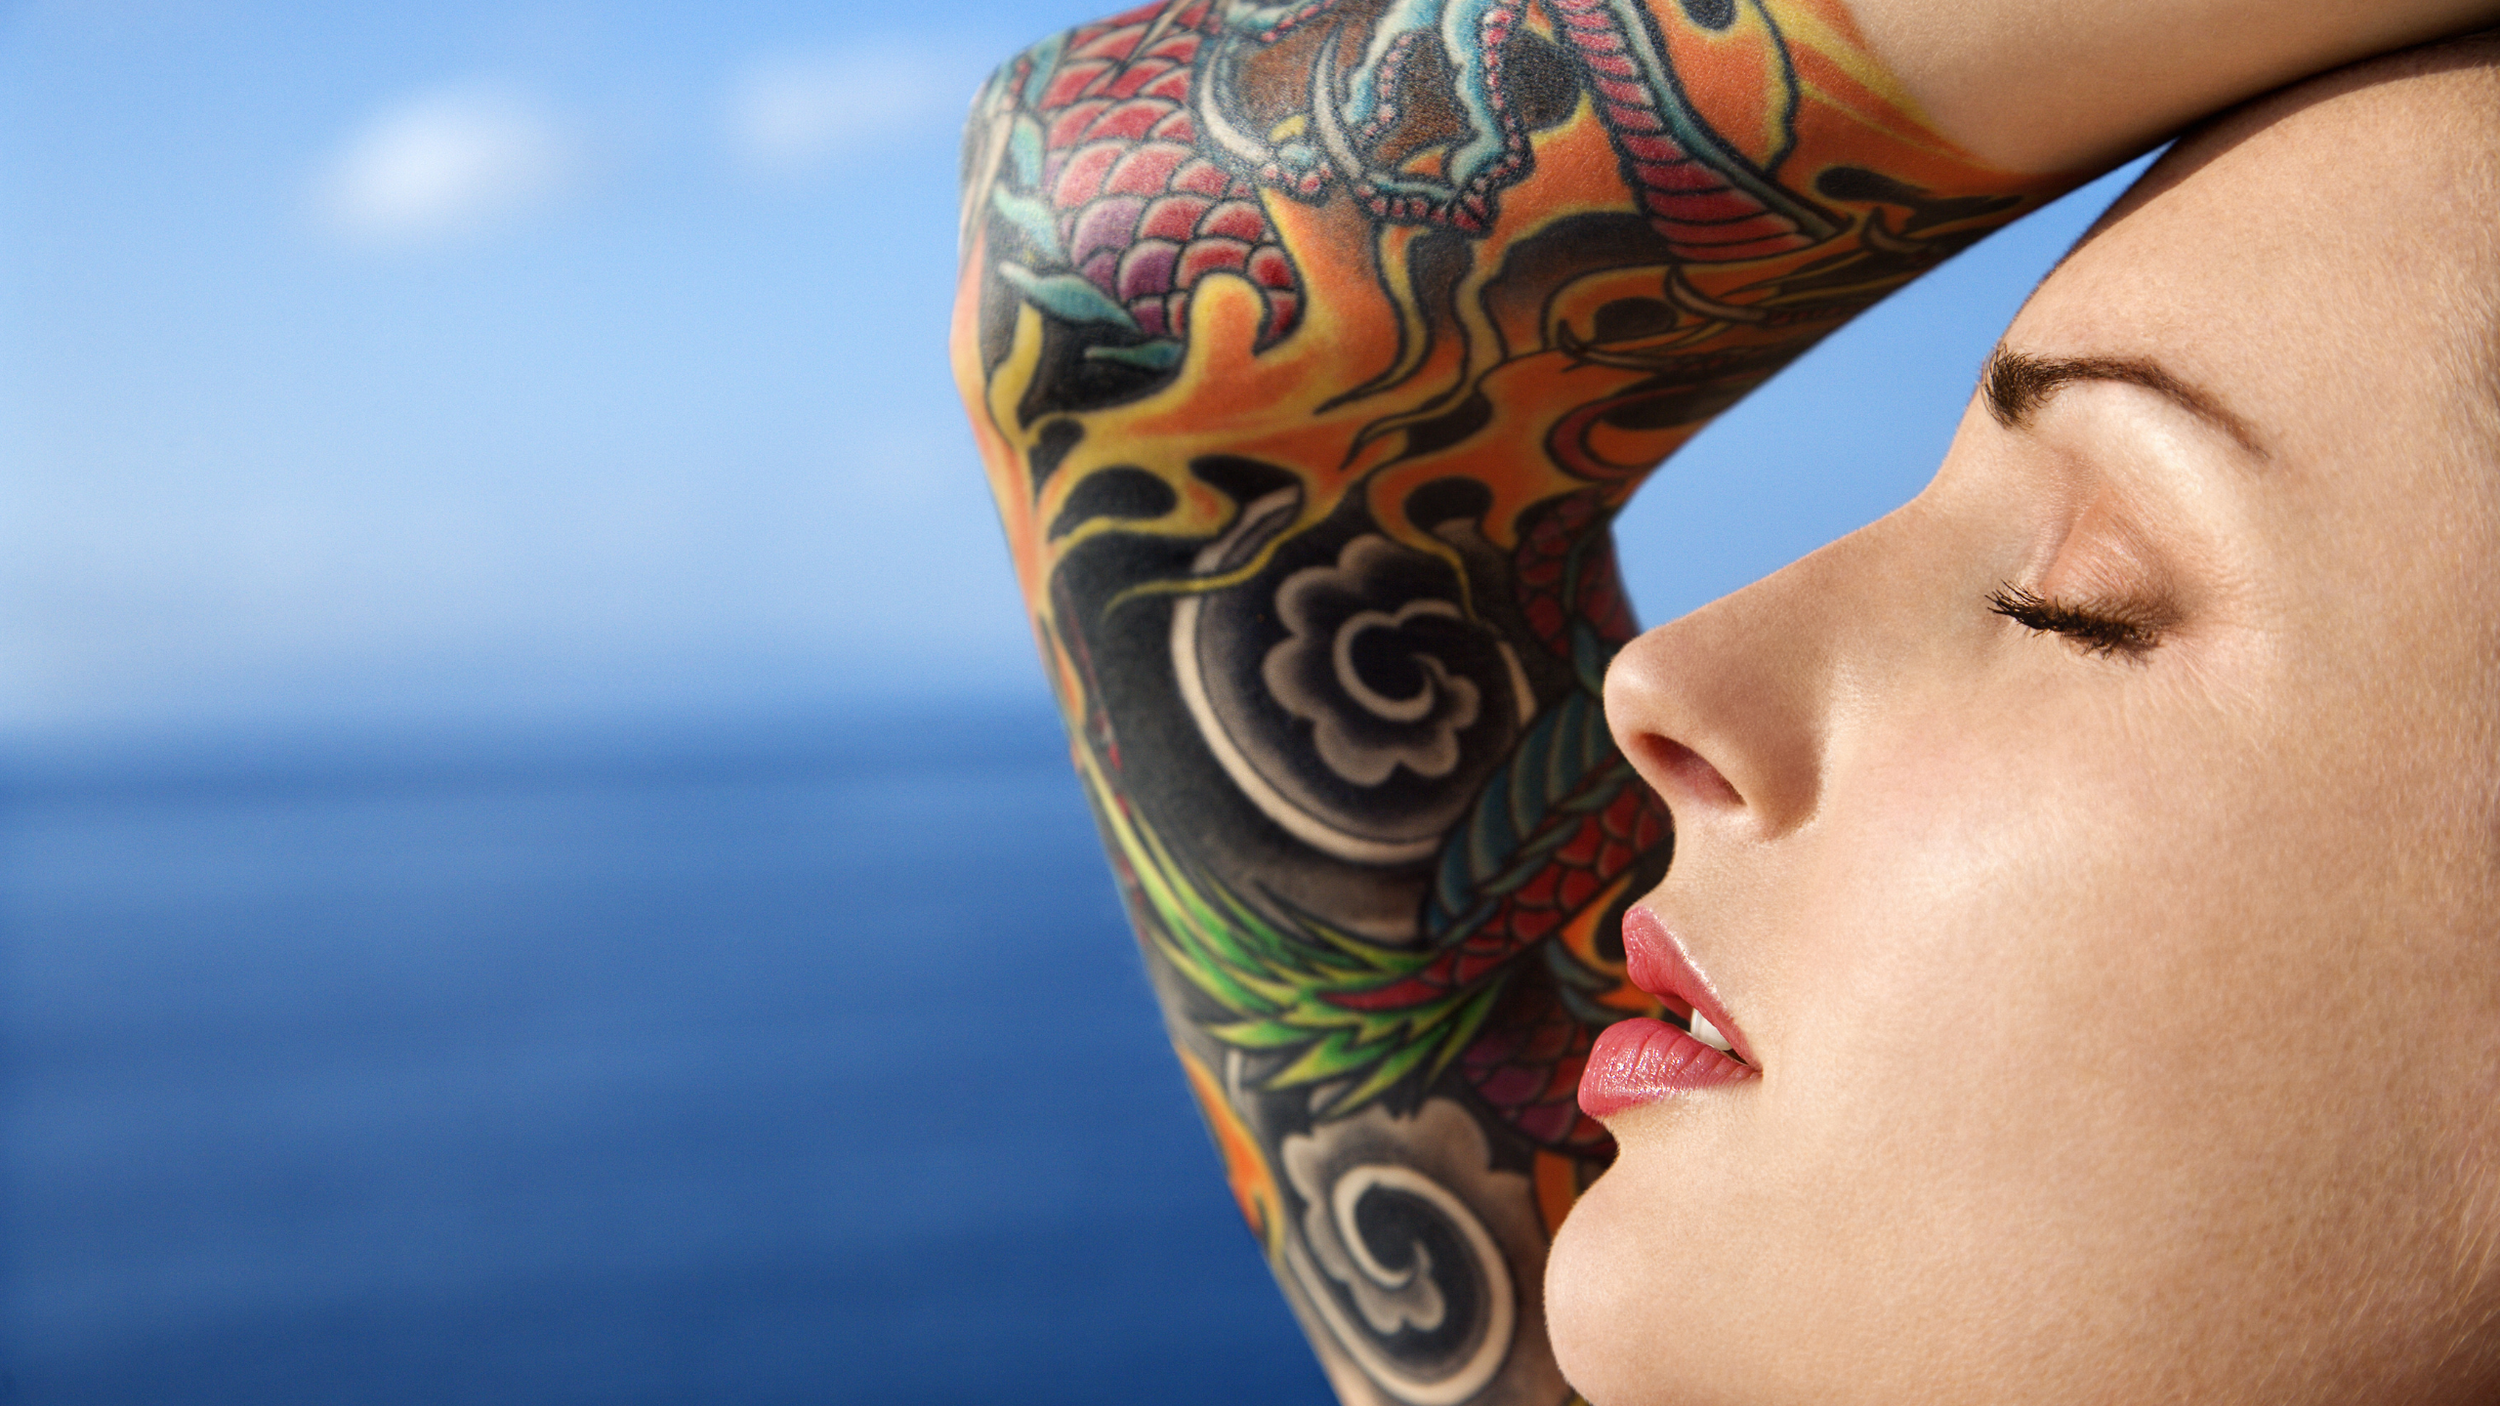 Ink Addiction Tattoos. by kaitna on DeviantArt